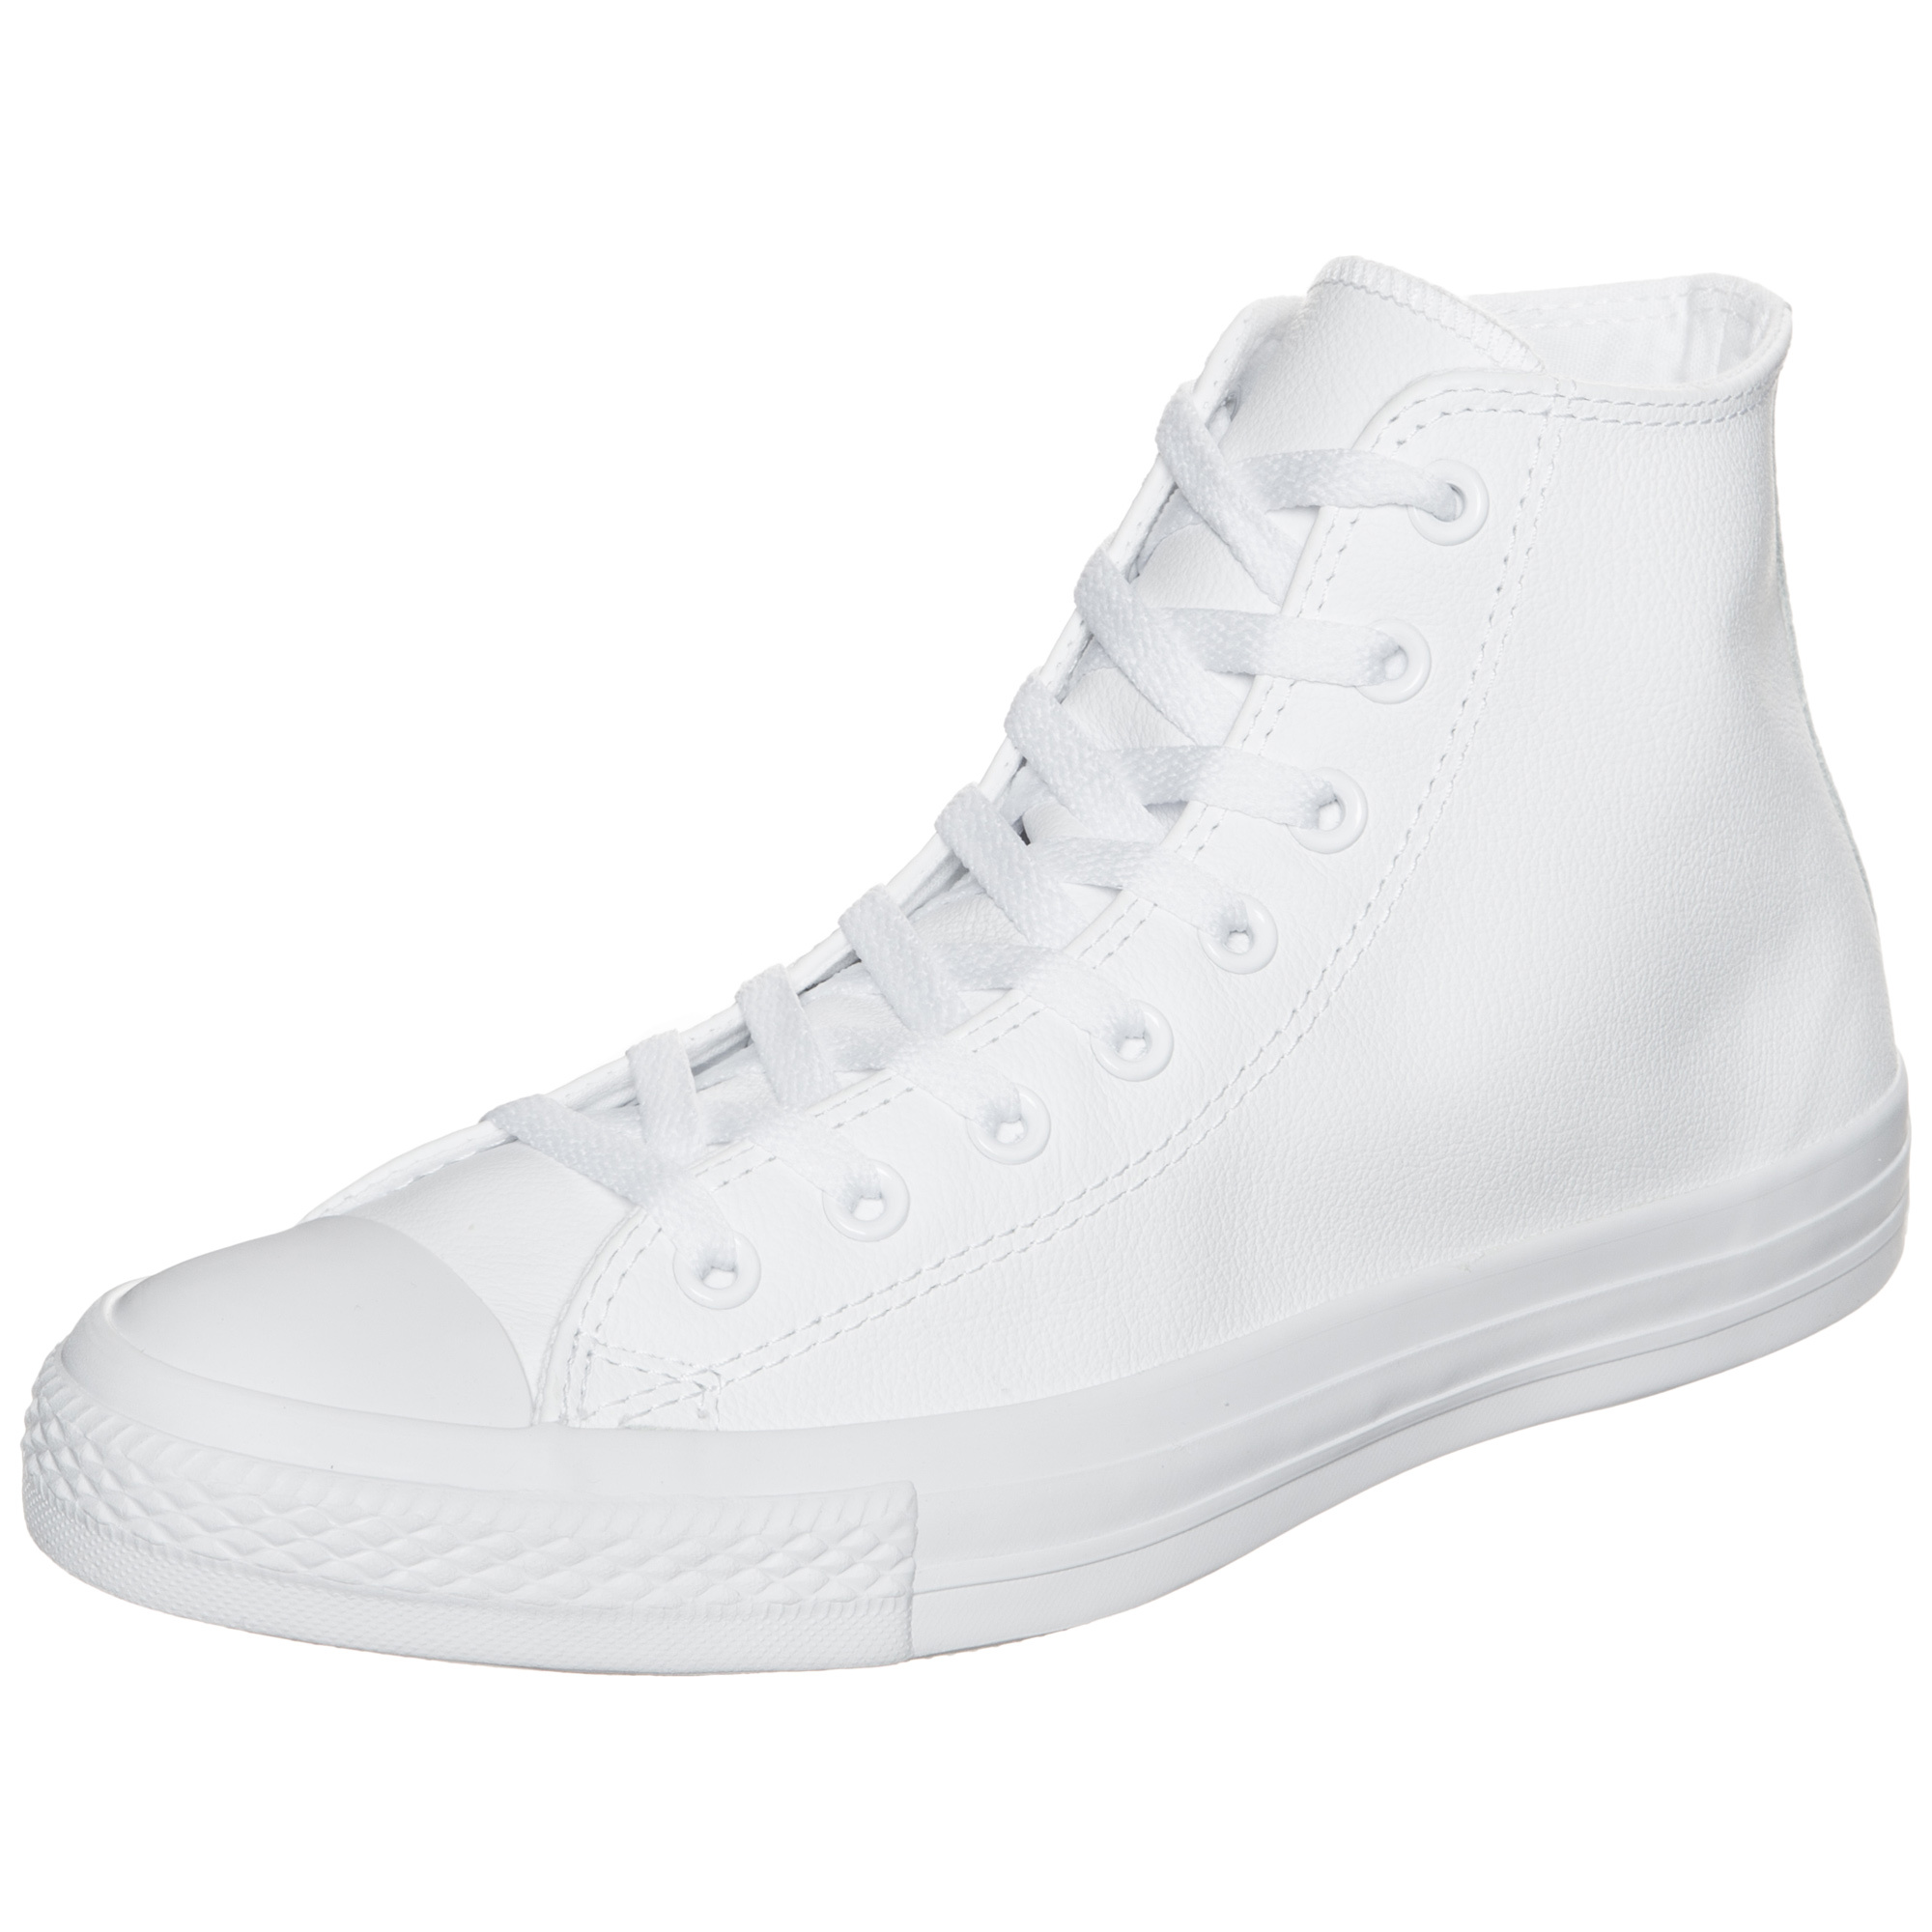 kdRpf Trampki & sneakersy CONVERSE Trampki wysokie Chuck Taylor All Star w kolorze Białym 